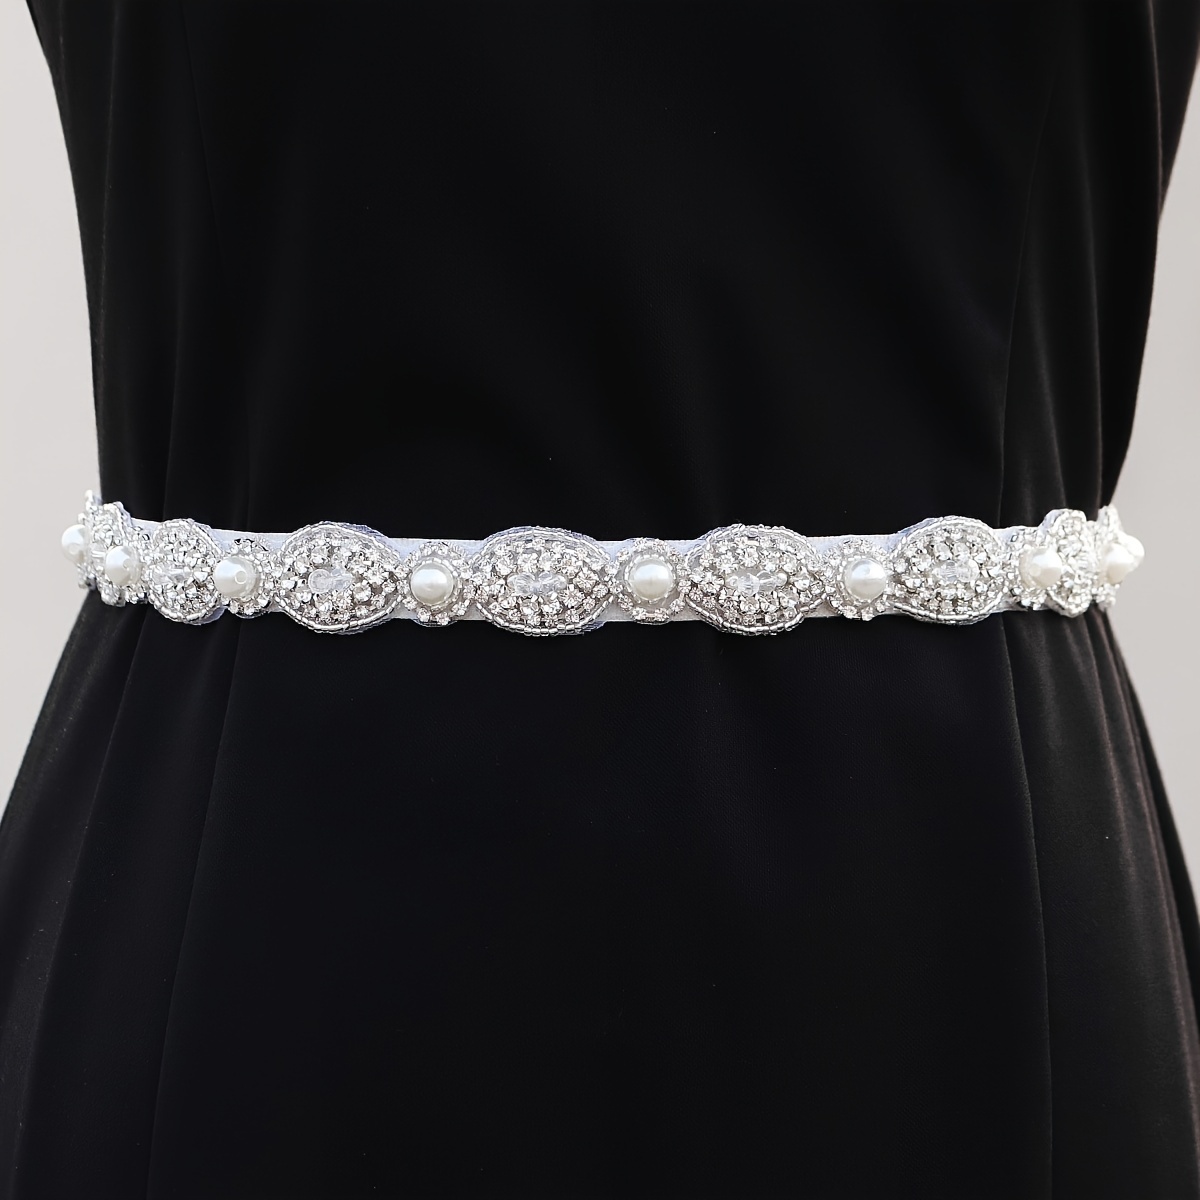 Women's Rhinestone Belt Bride Belts Bridal Sashes Wedding Accessories Belts  Crystal Wedding Belt for Evening Party Prom Gown Dress